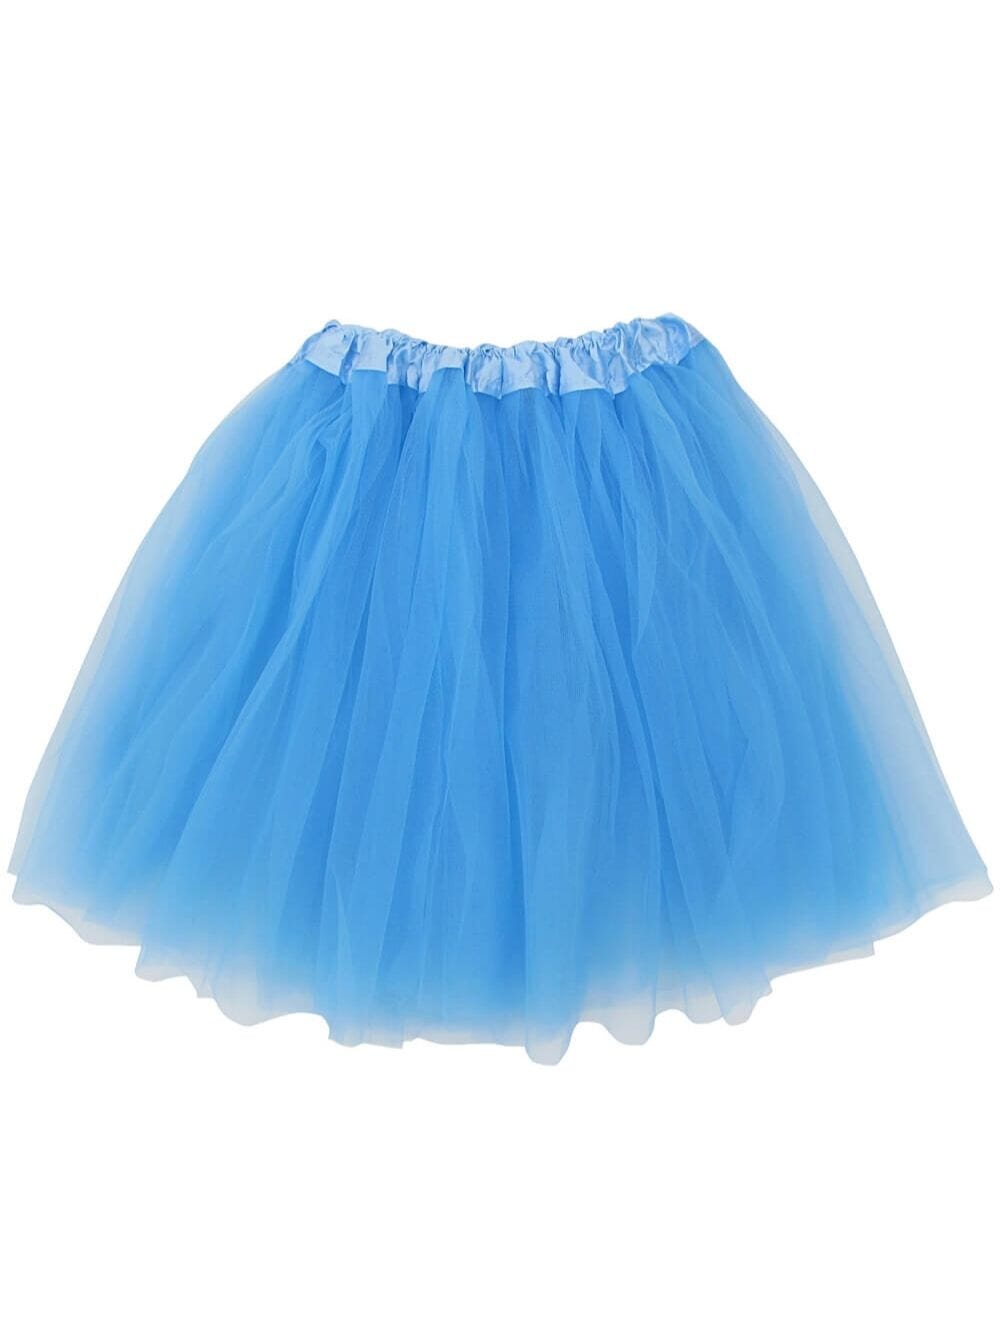 Light Blue Plus Size Adult Tutu Skirt - Women's Plus Size 3- Layer Basic Ballet Costume Dance Tutus - Sydney So Sweet